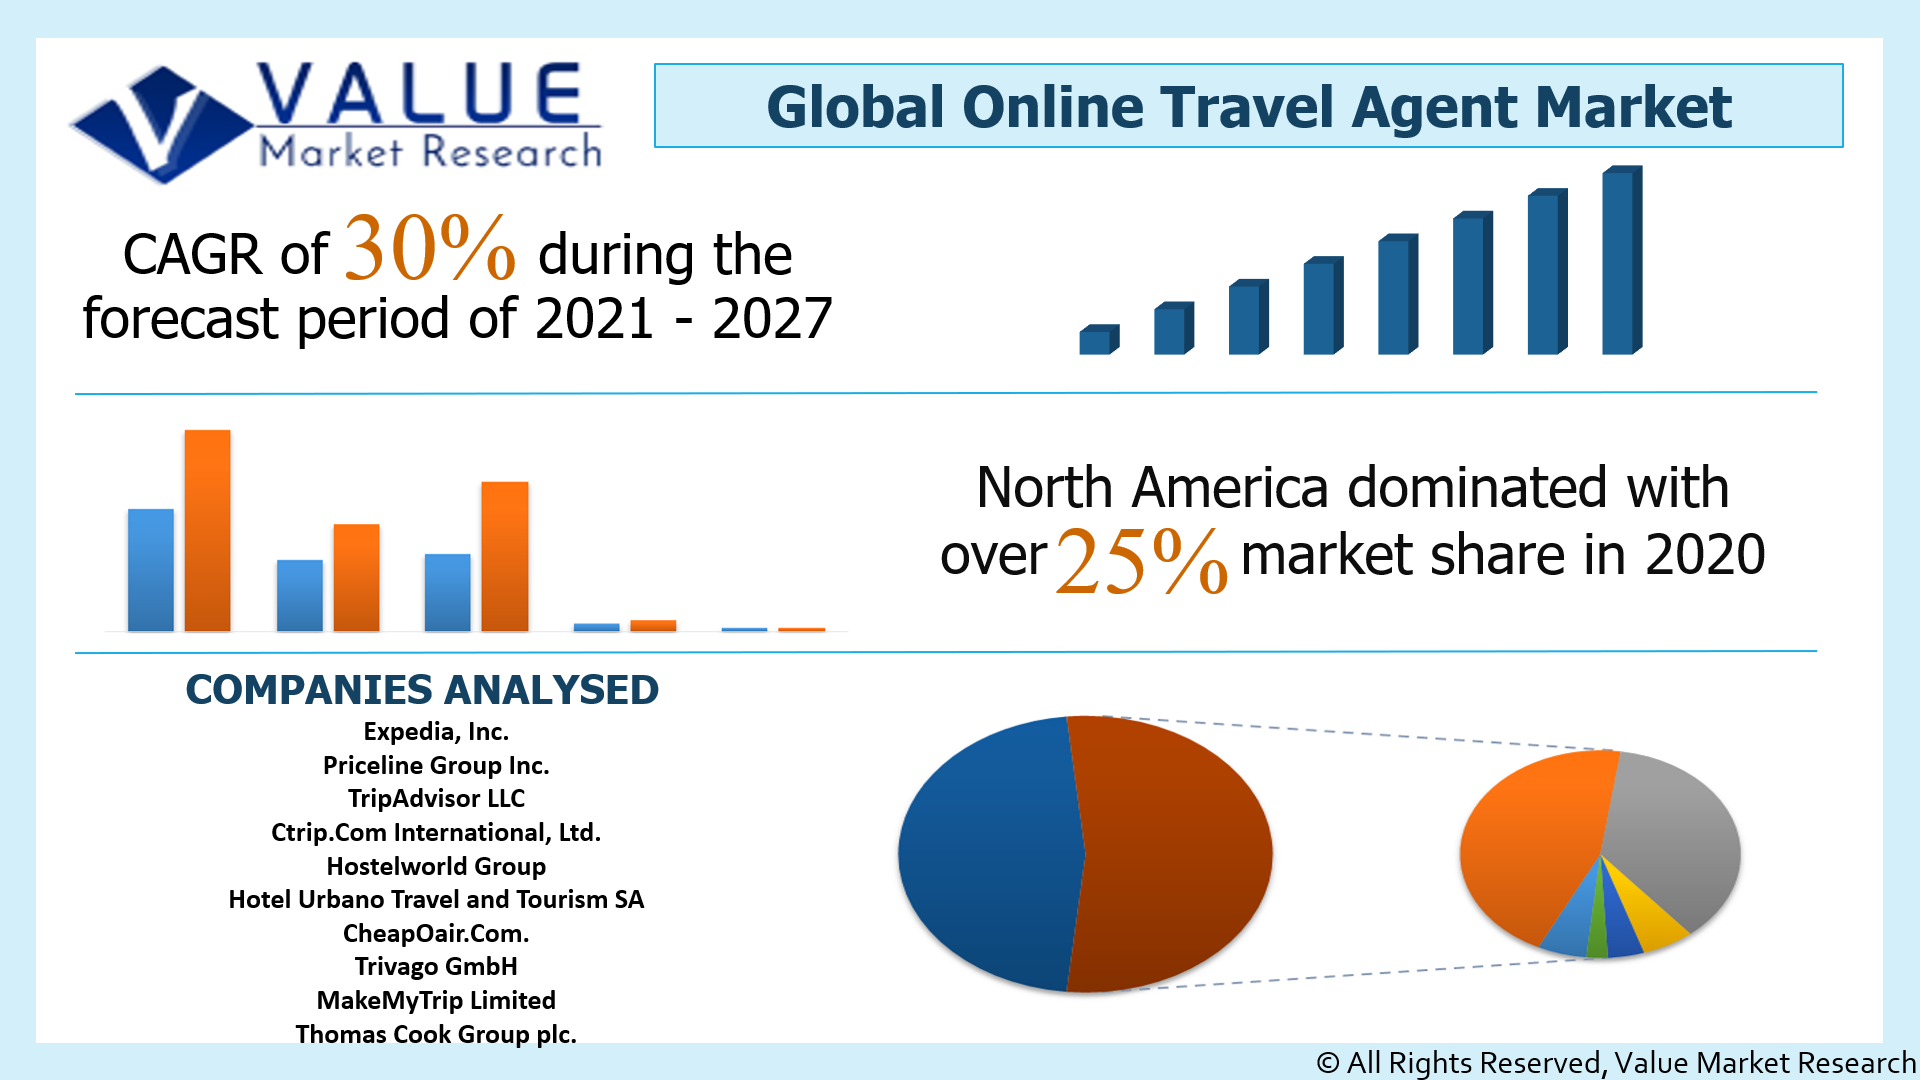 Global Online Travel Agent Market Share